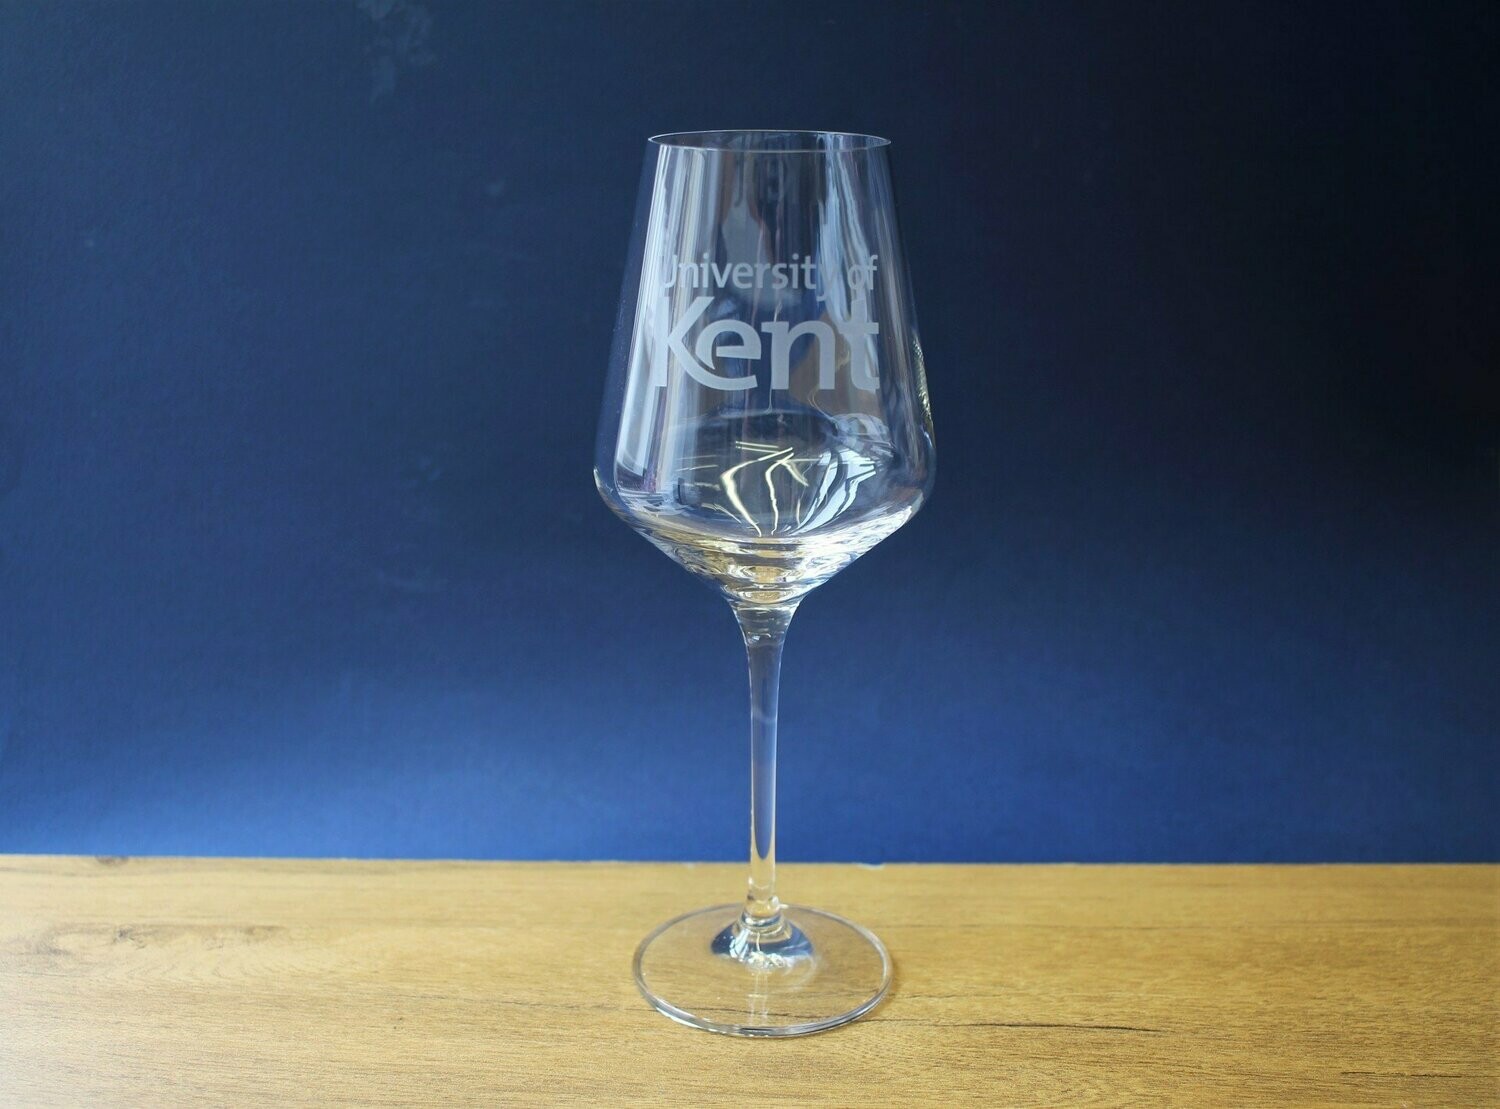 University of Kent Wine Glass